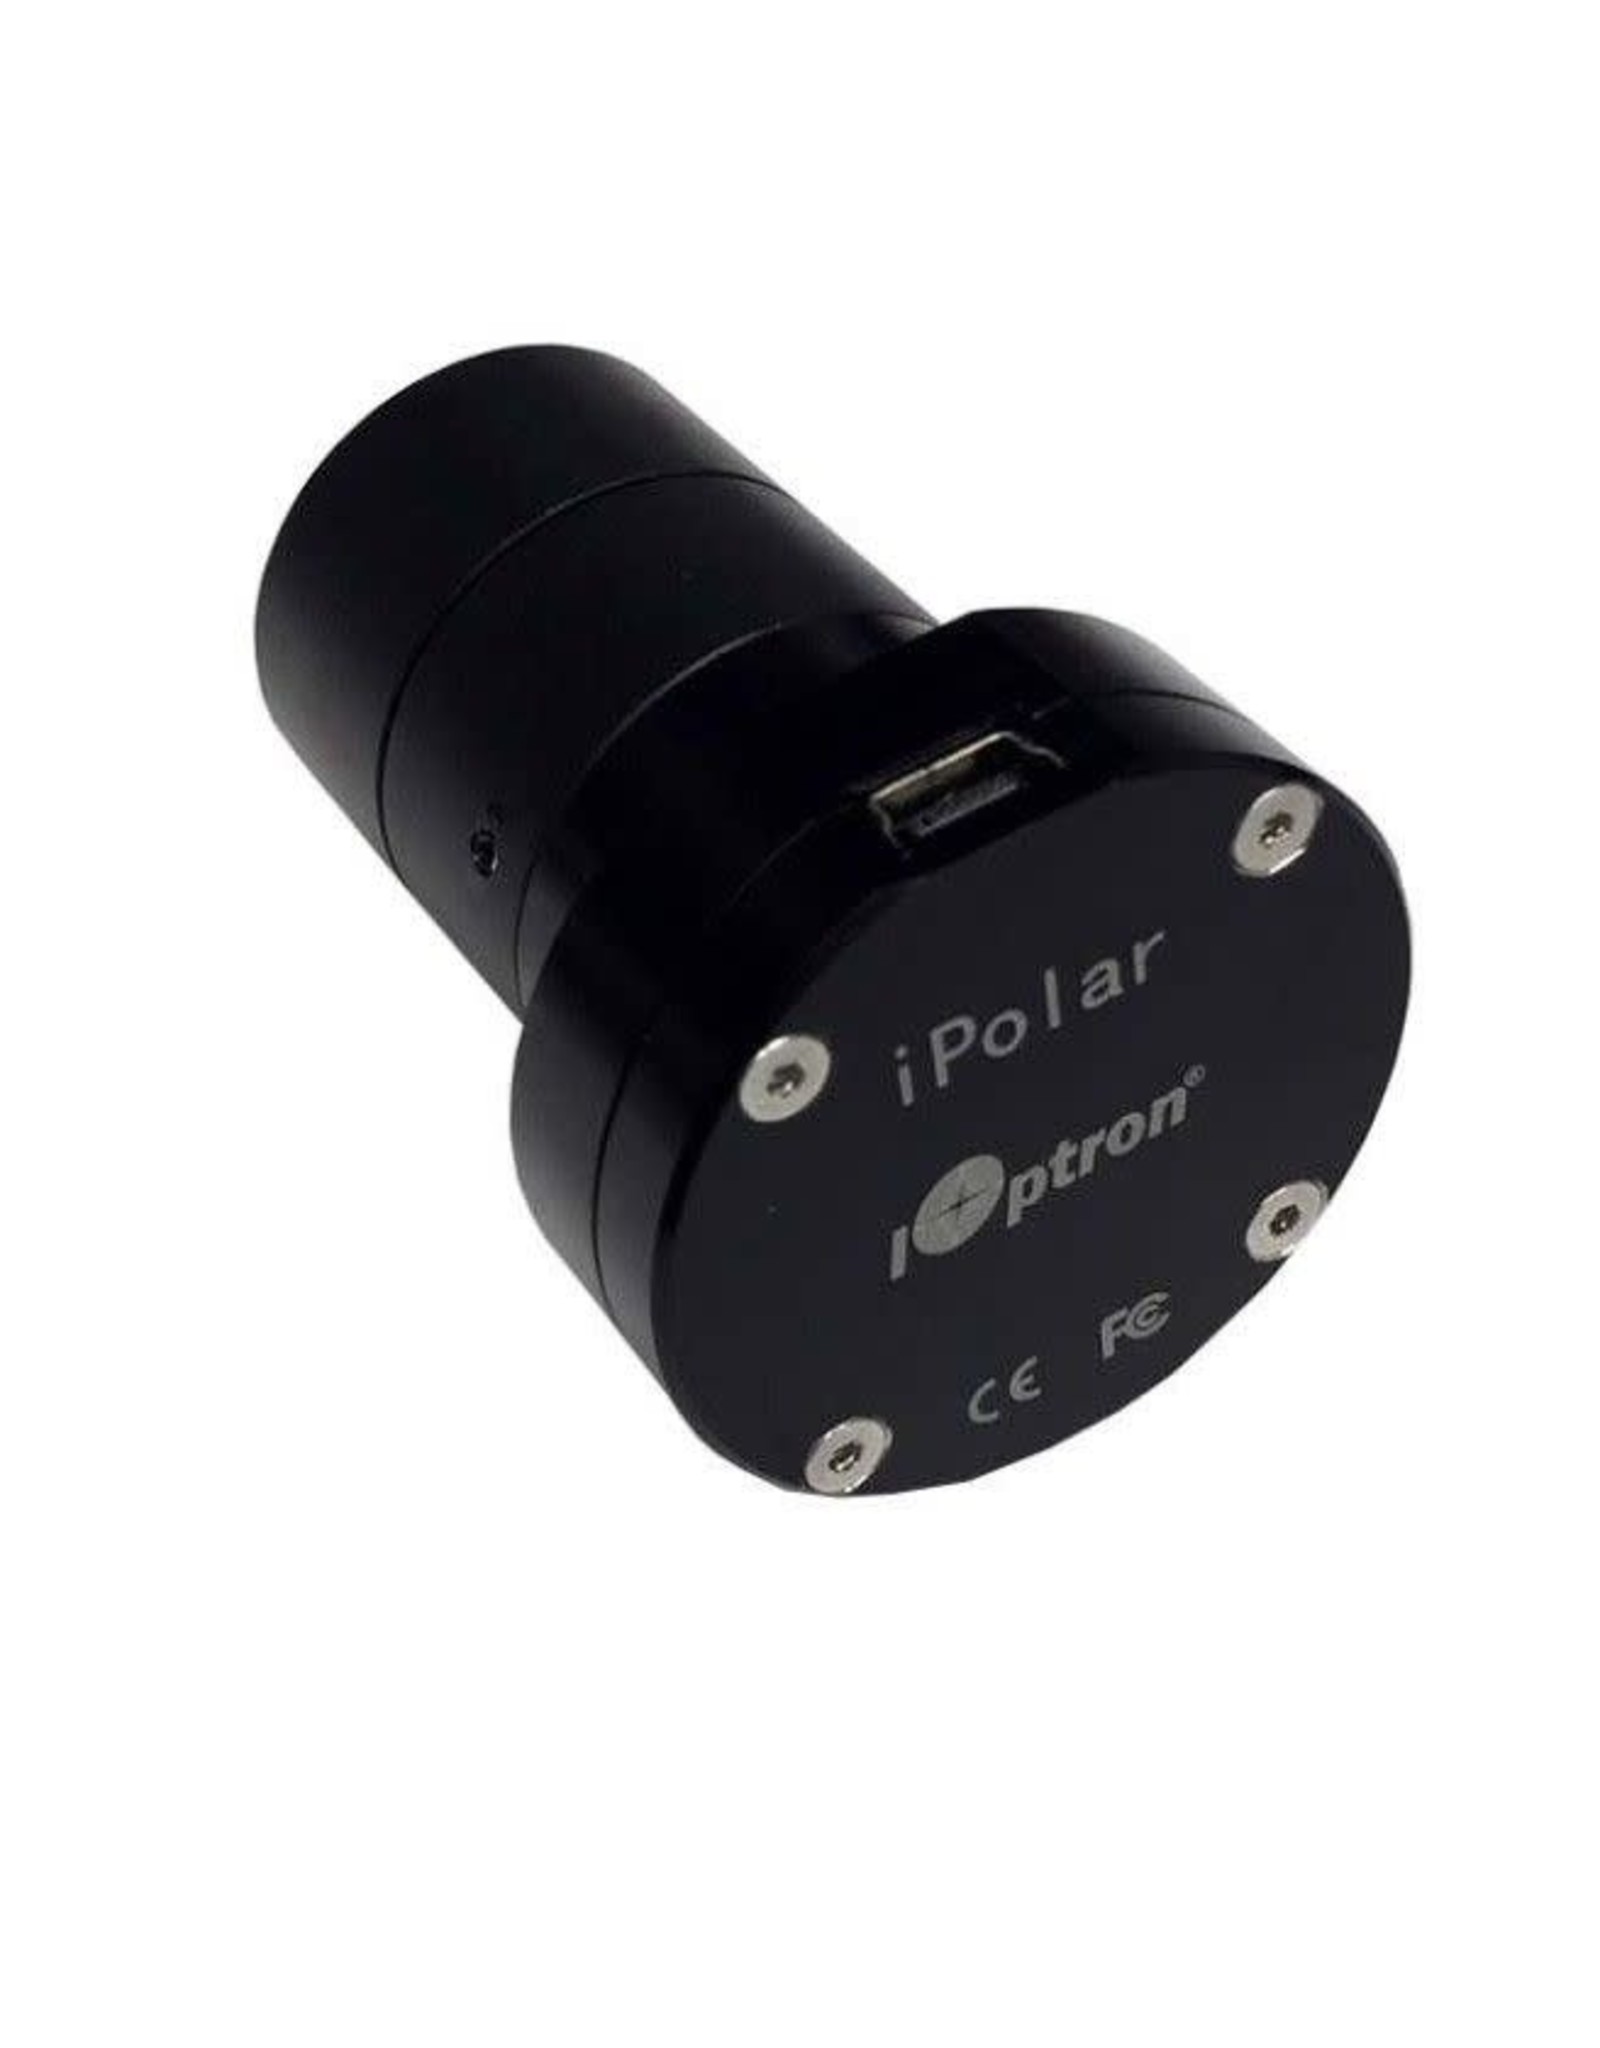 iOptron iOptron iPolar Electronic Polarscope - No Mount Adapter - Fits SkyHunter - 3339-SH